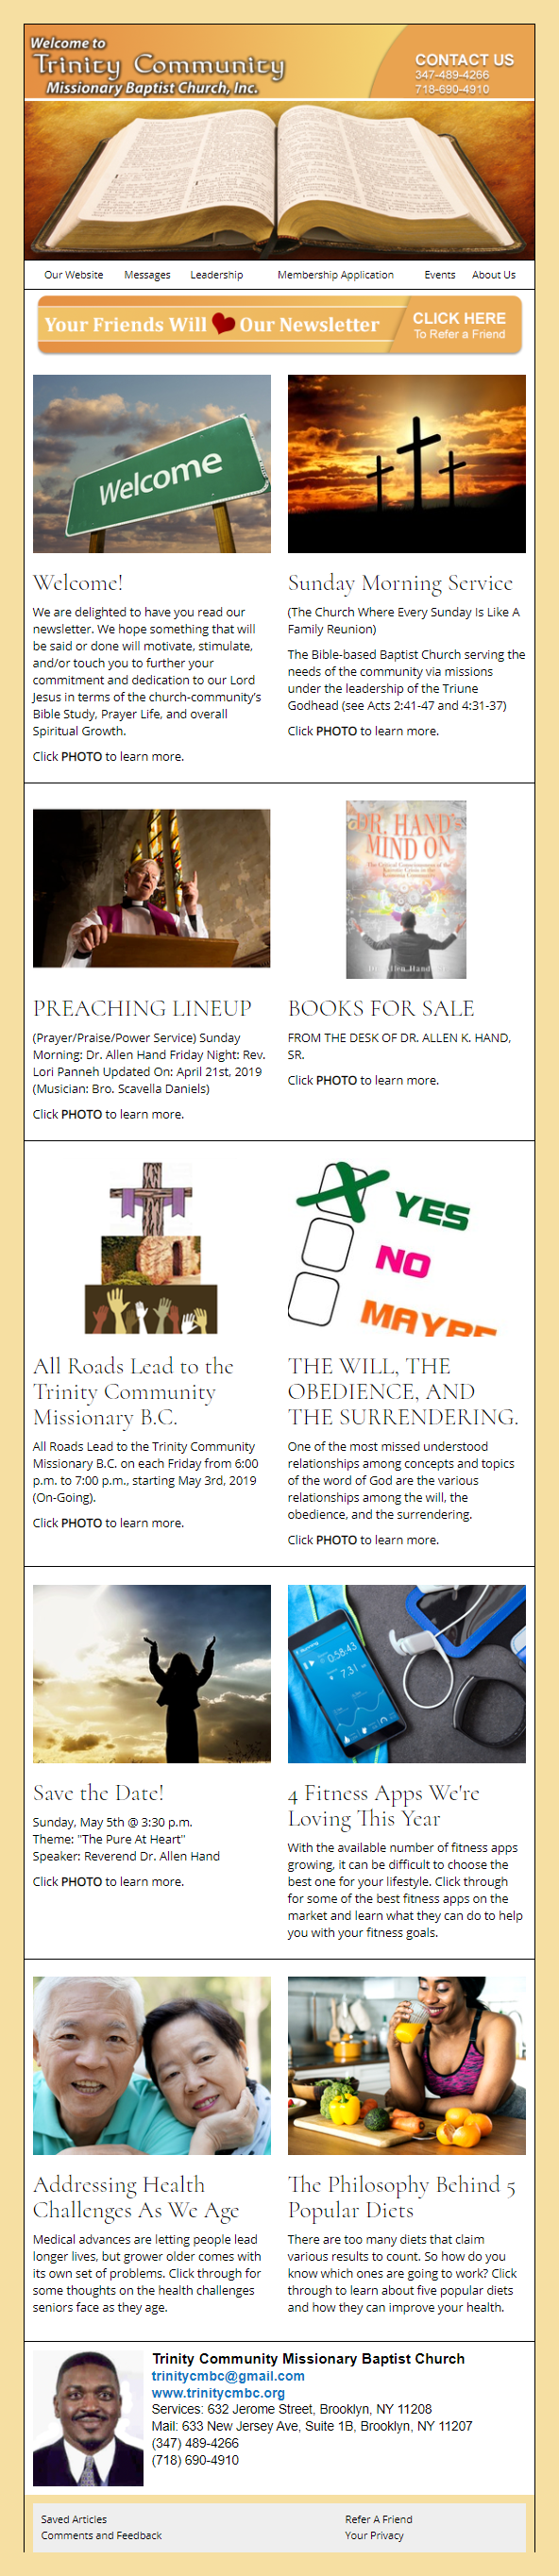 Trinity Community Mission Baptist Church Newsletter roundup